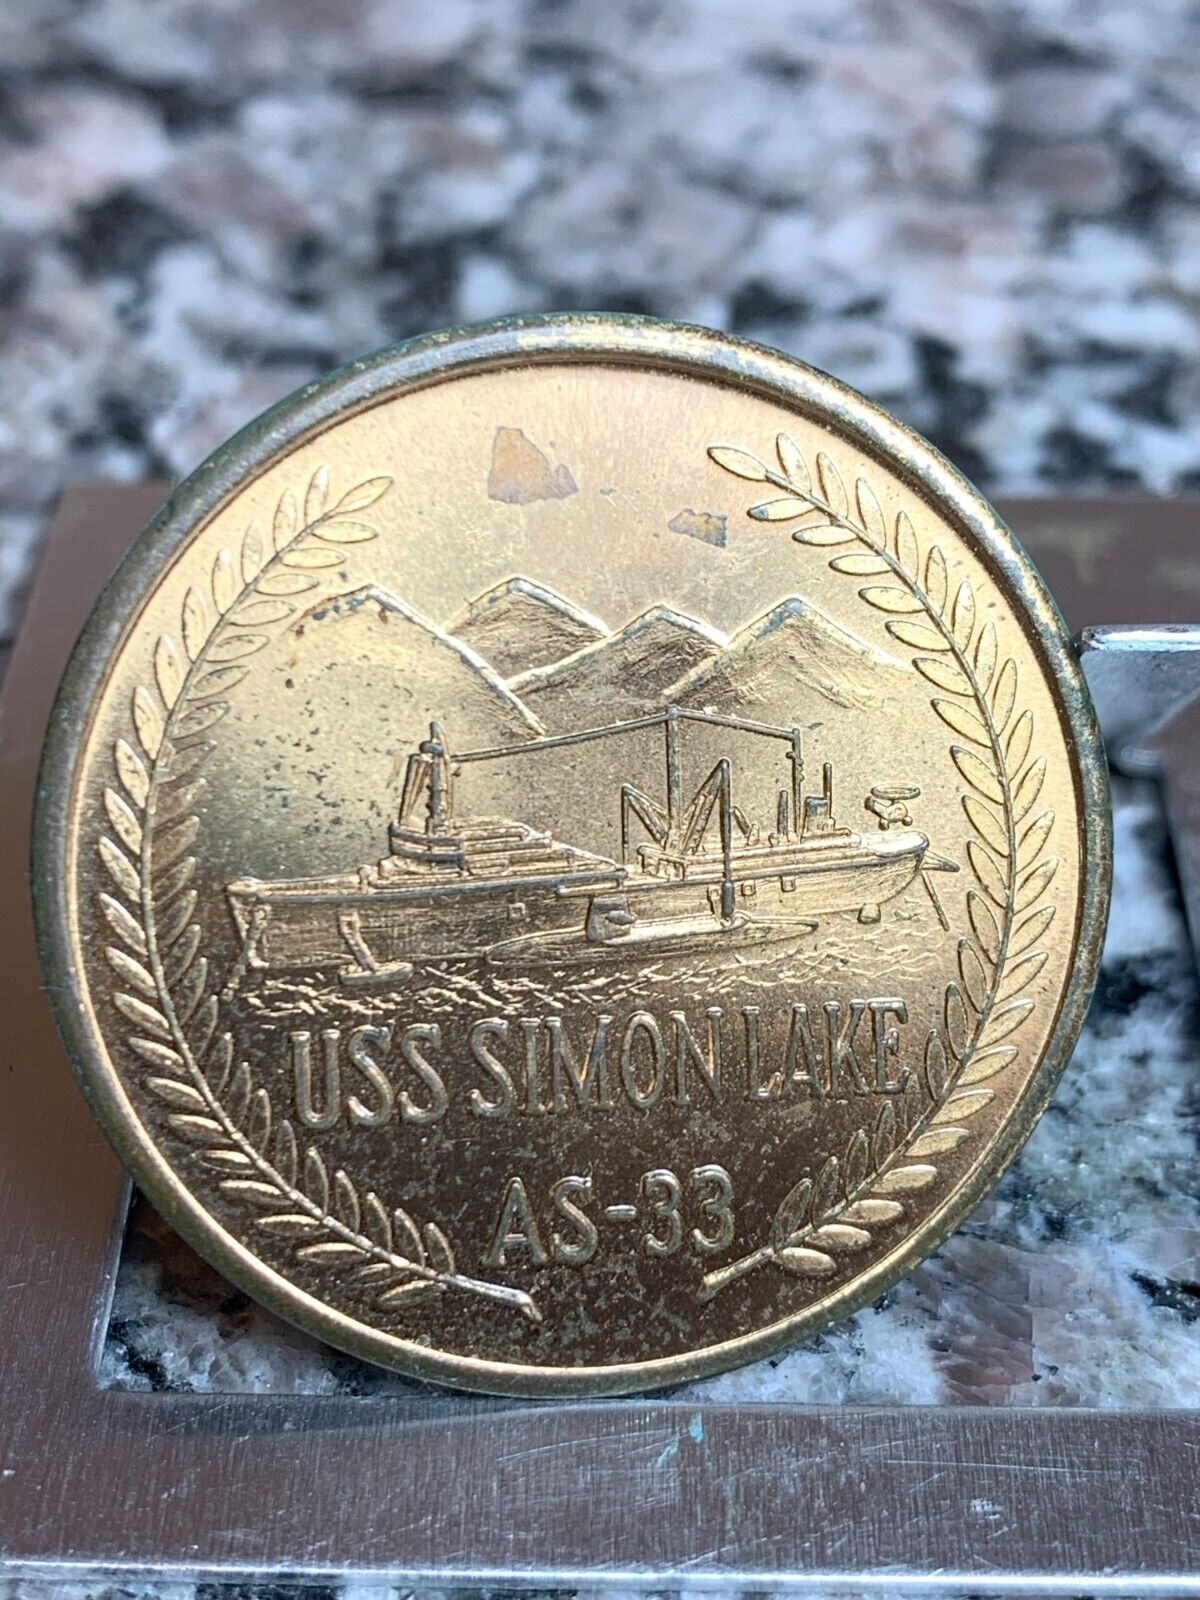 USS Simon Lake AS33 Medal Christened Feb 8, 1964 Commissioned Nov 7, 1964